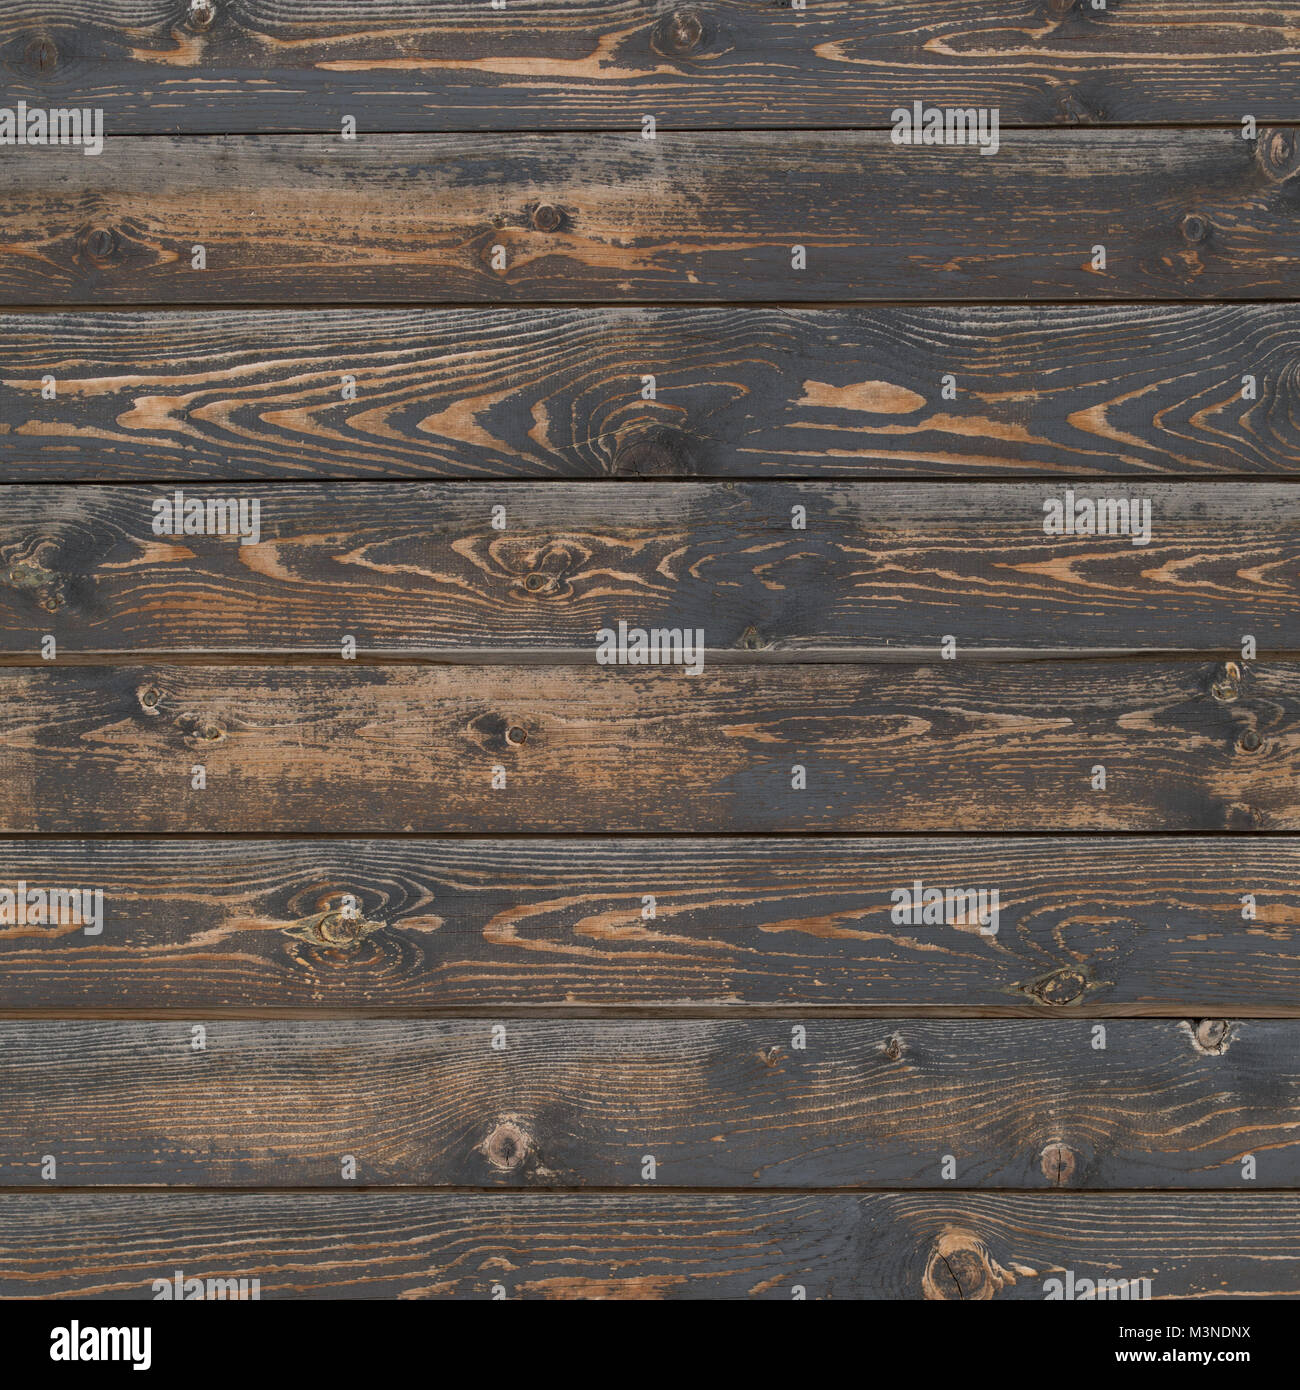 Dark wood texture or background Stock Photo